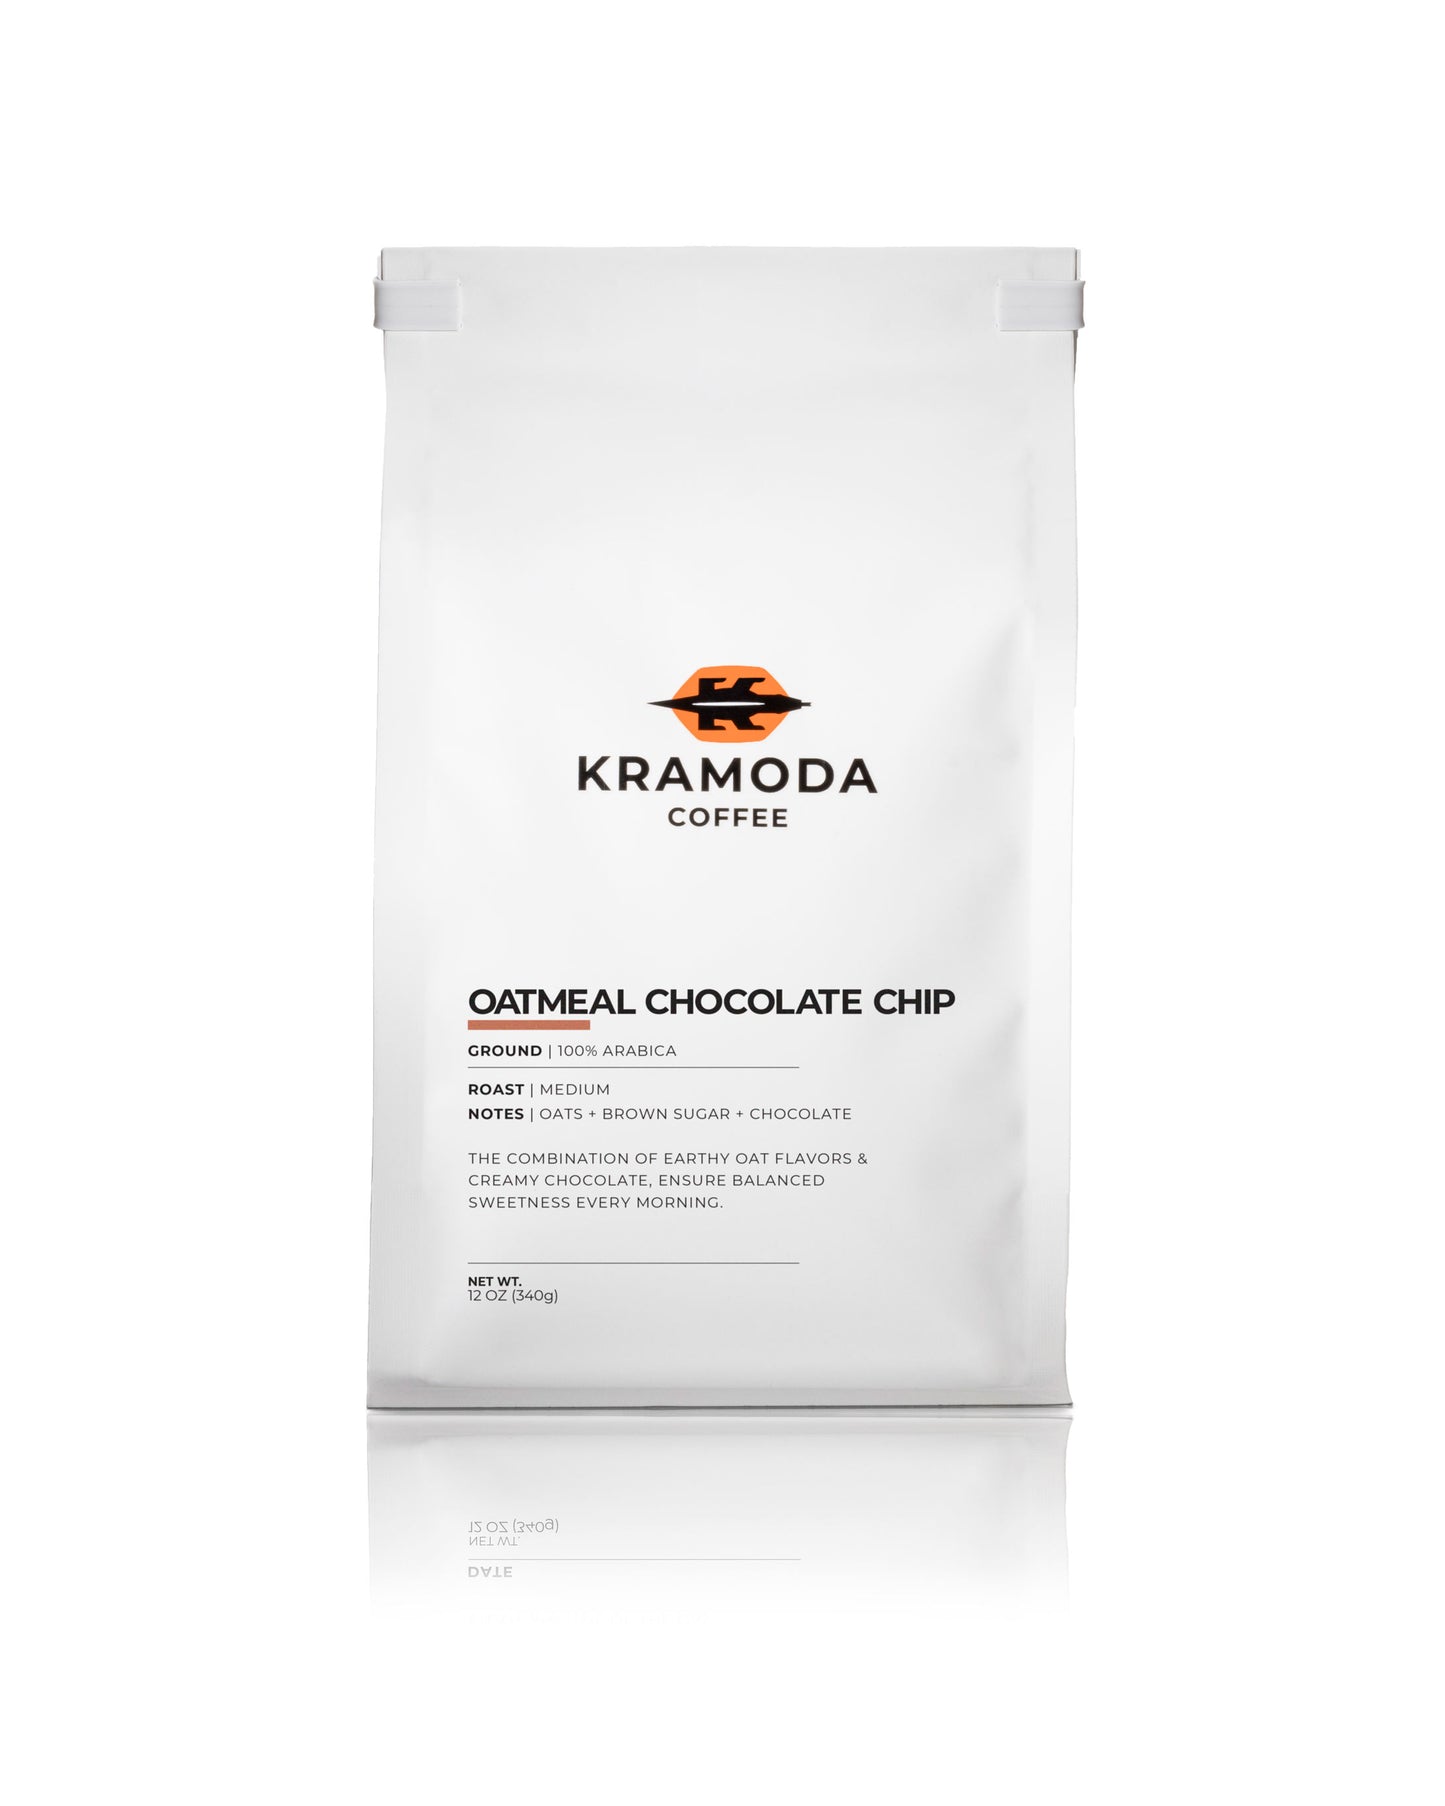 Oatmeal Chocolate Chip Coffee Bag